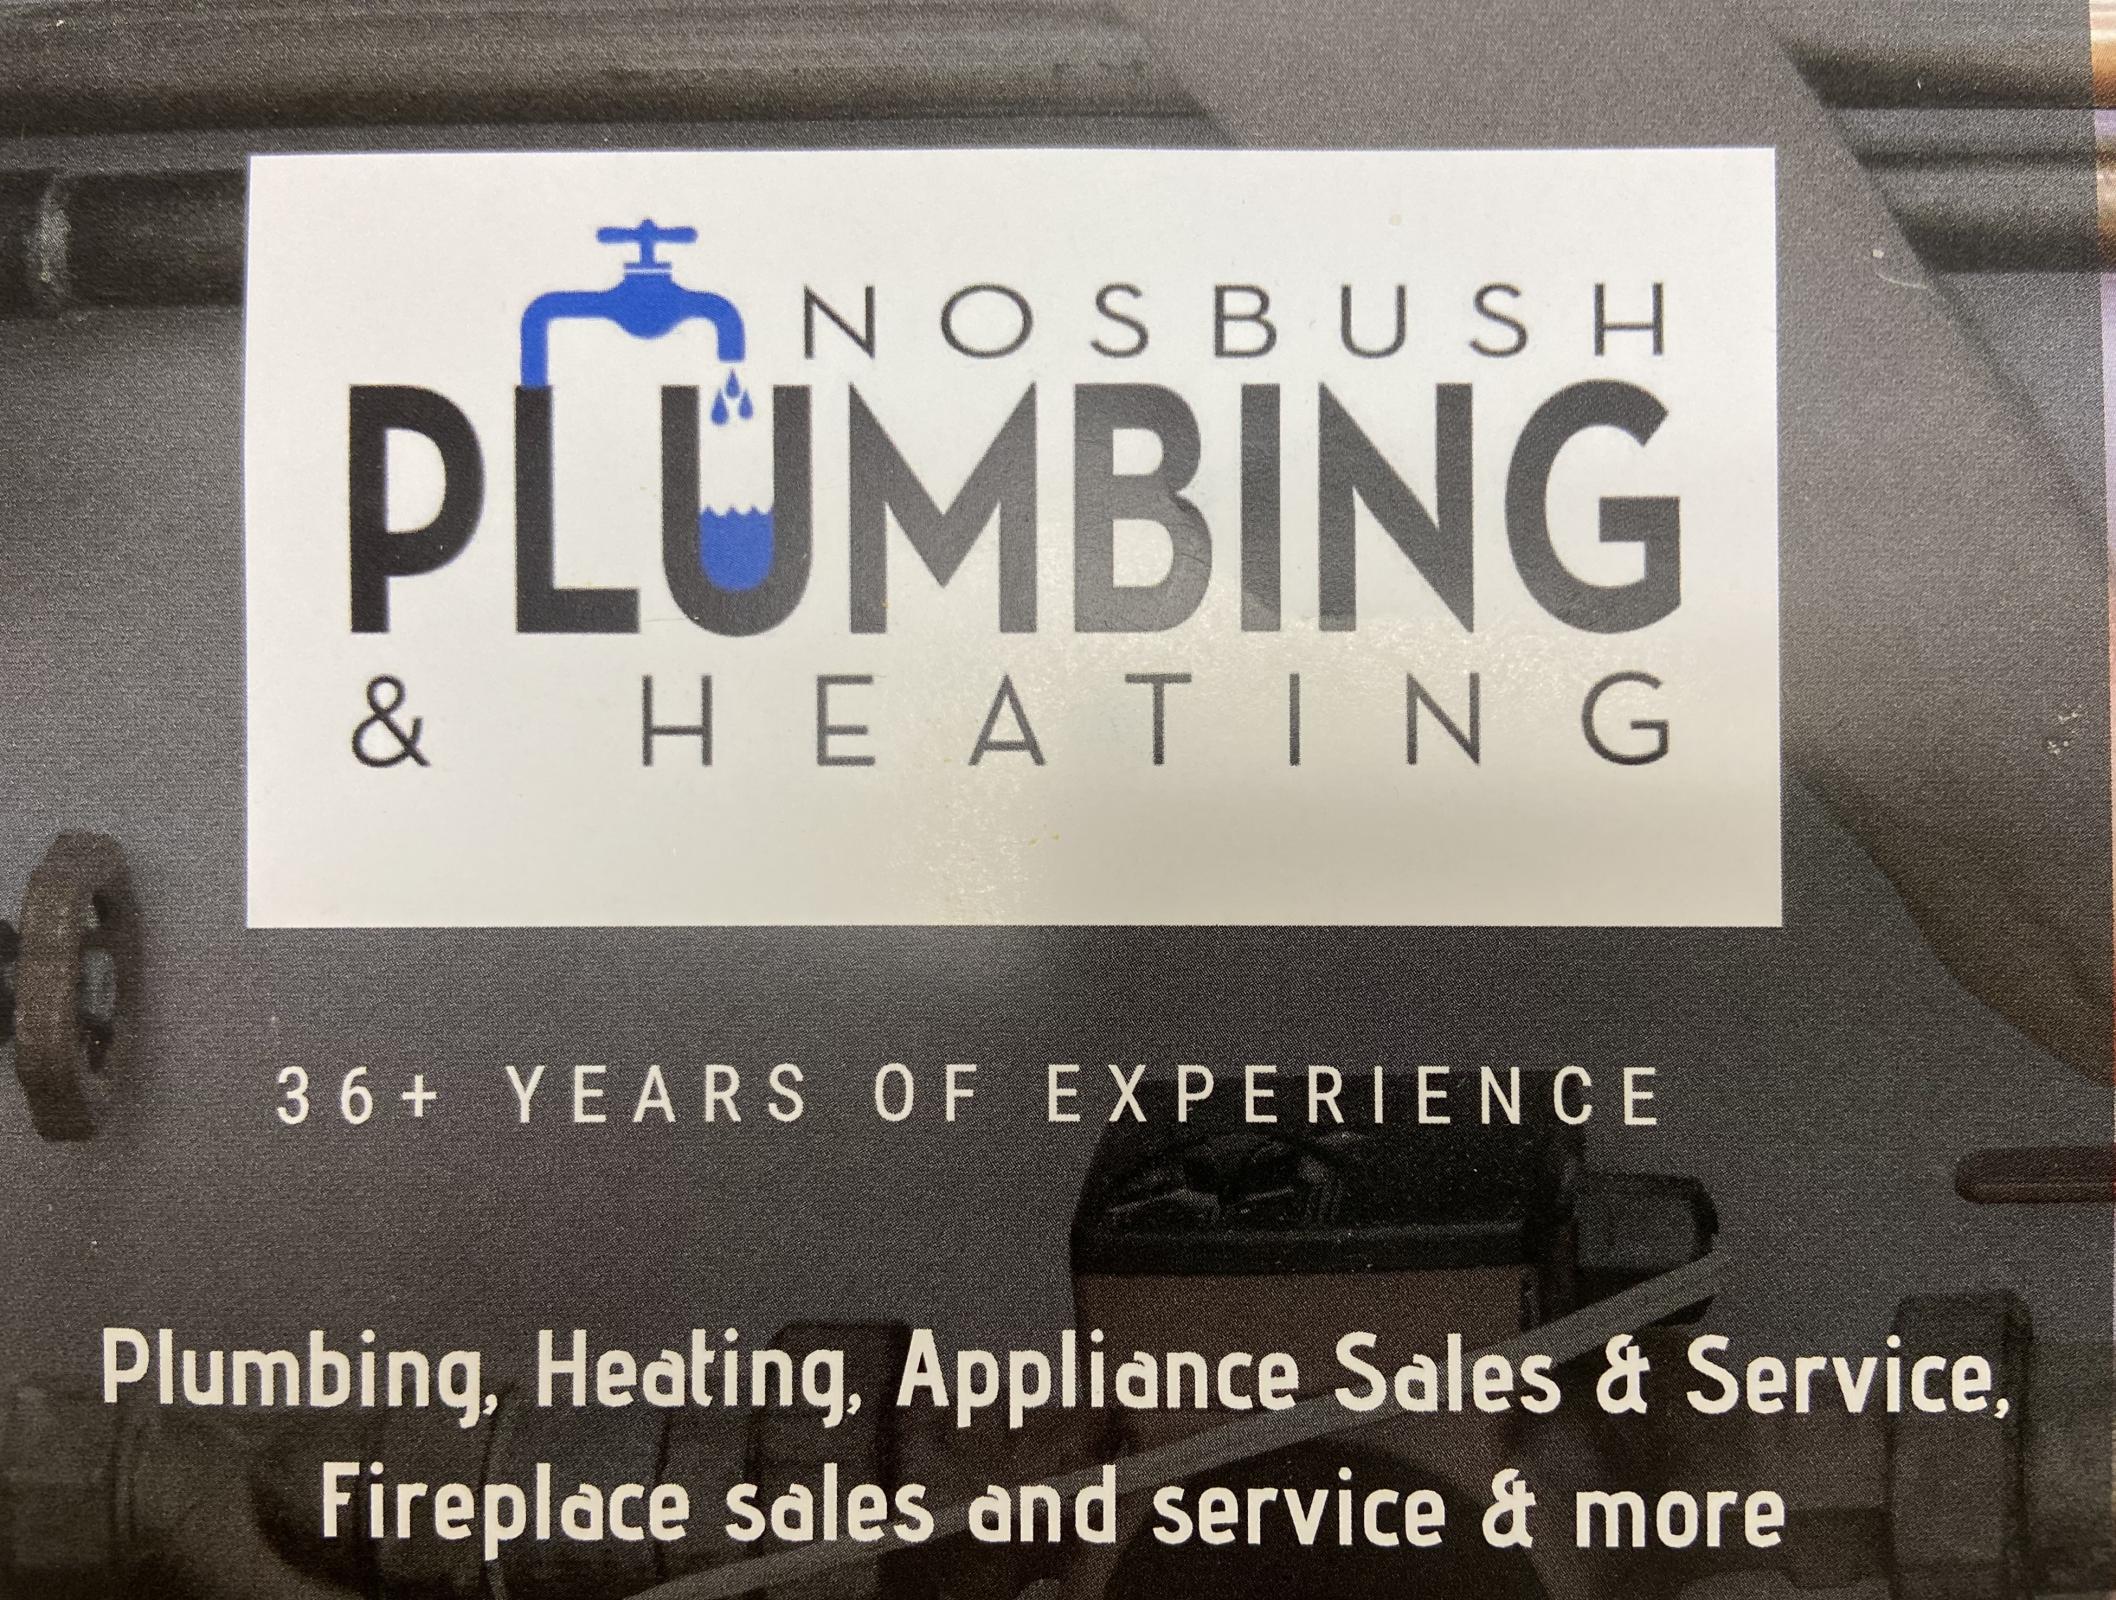 Nosbush Plumbing & Heating's Image